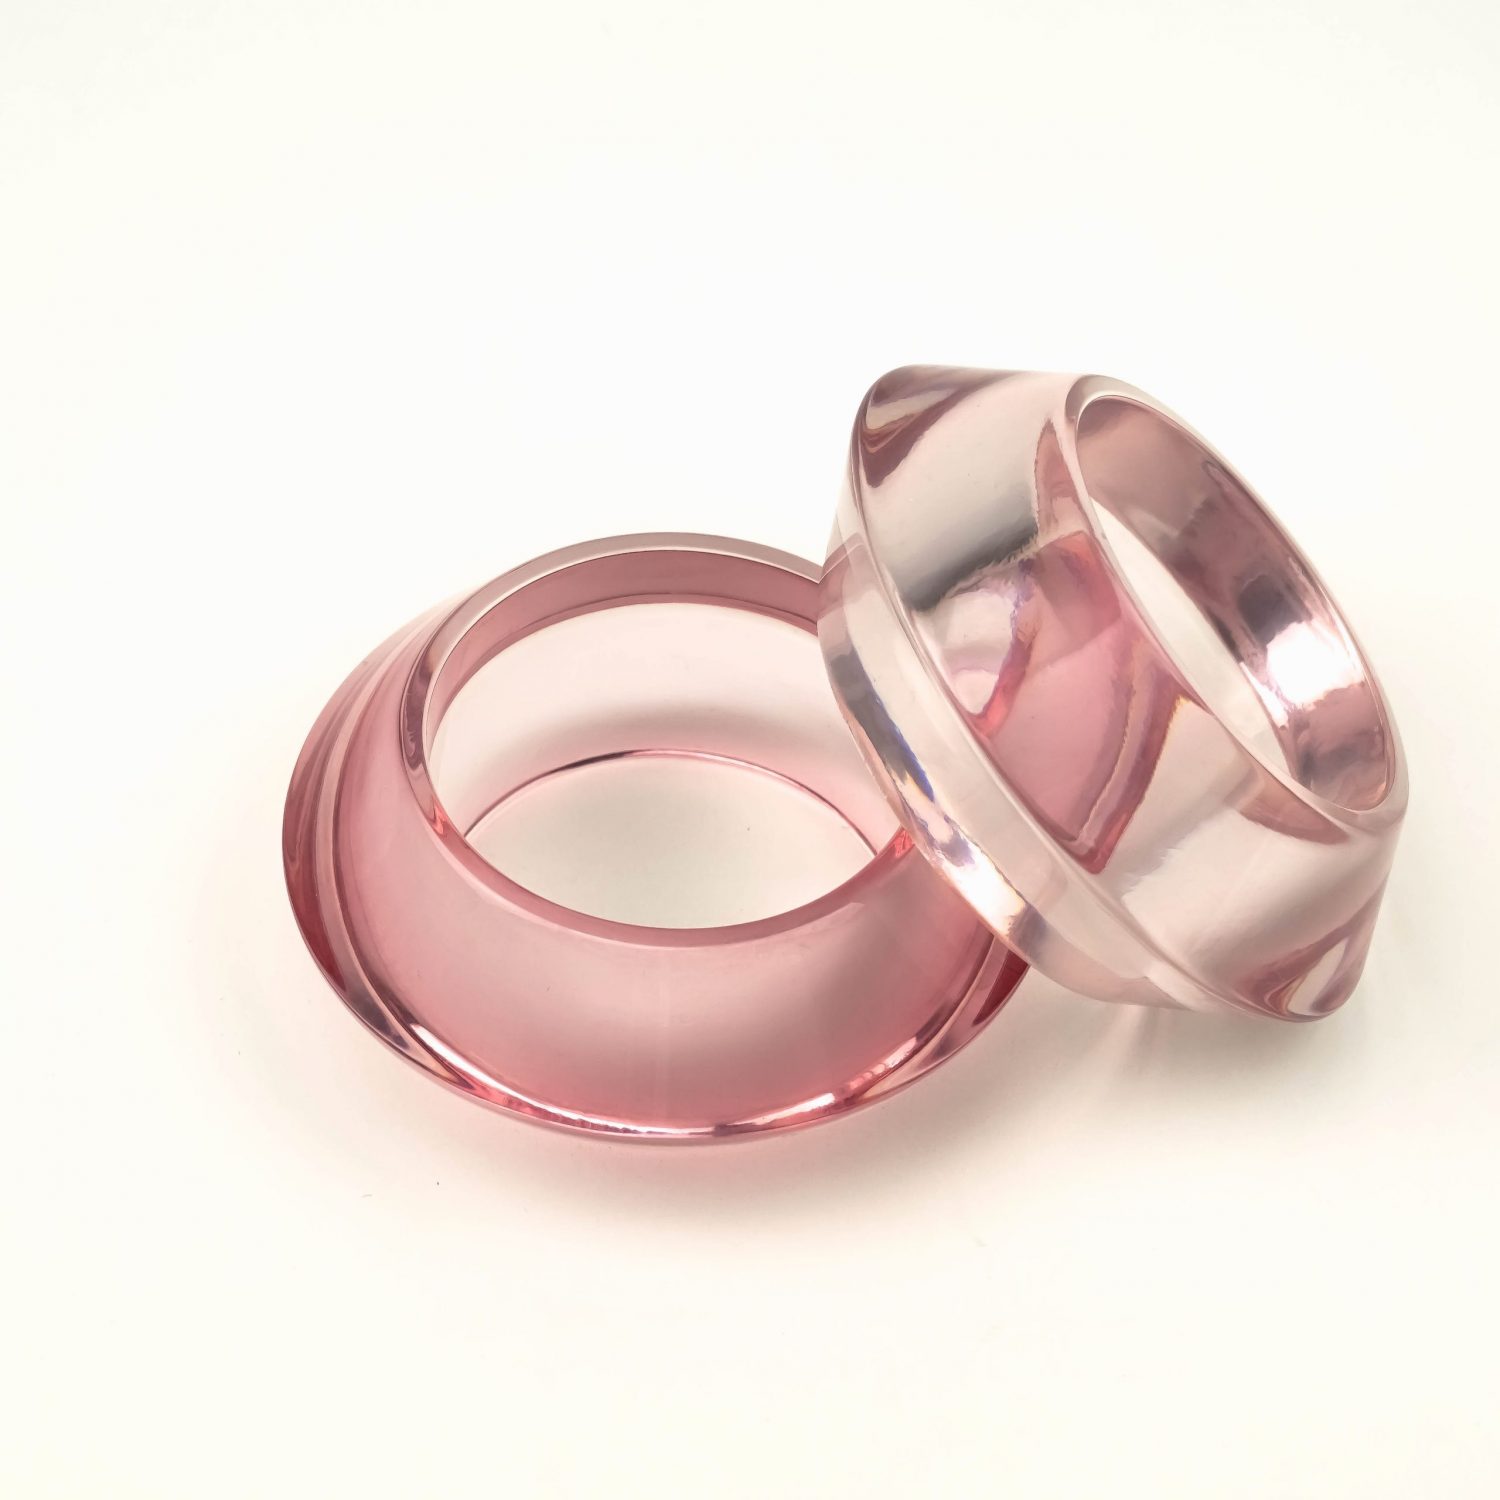 Transparent clear bracelet/bangle light rose color buy exclusive online www.axelles-fashion.com ref SM0101